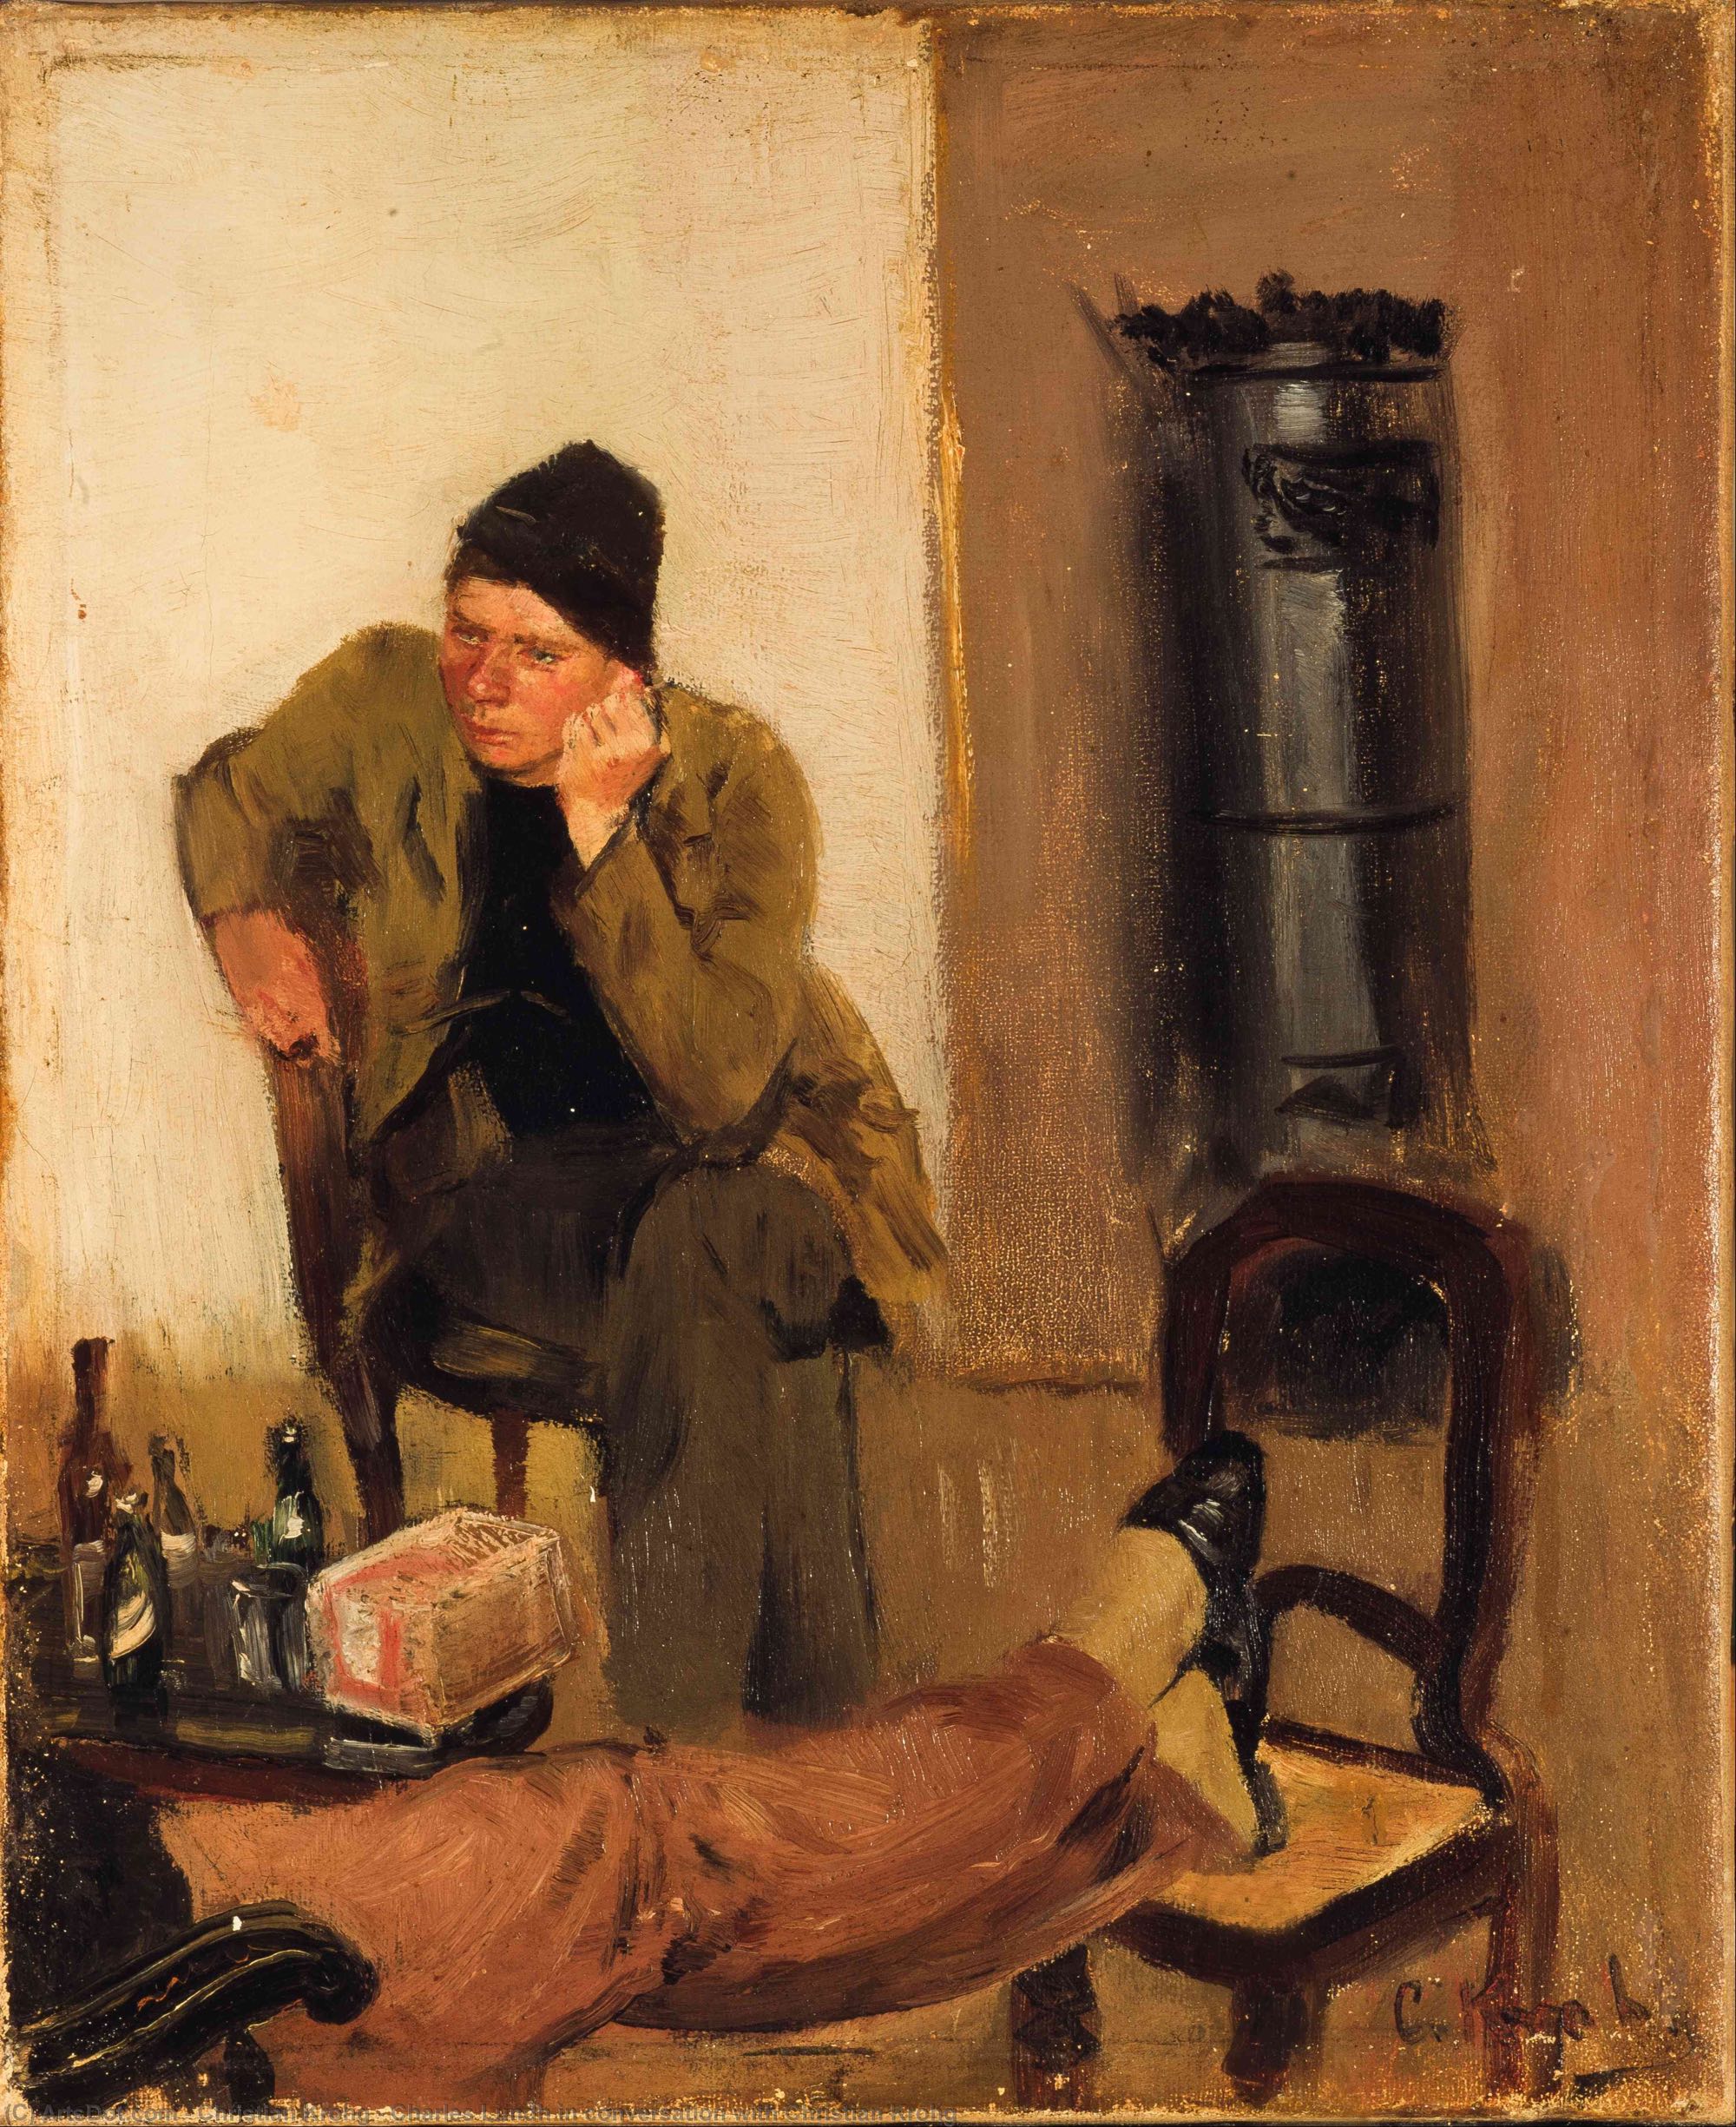 Charles Lundh en conversación con Christian Krohg (1883), de Christian Krohg